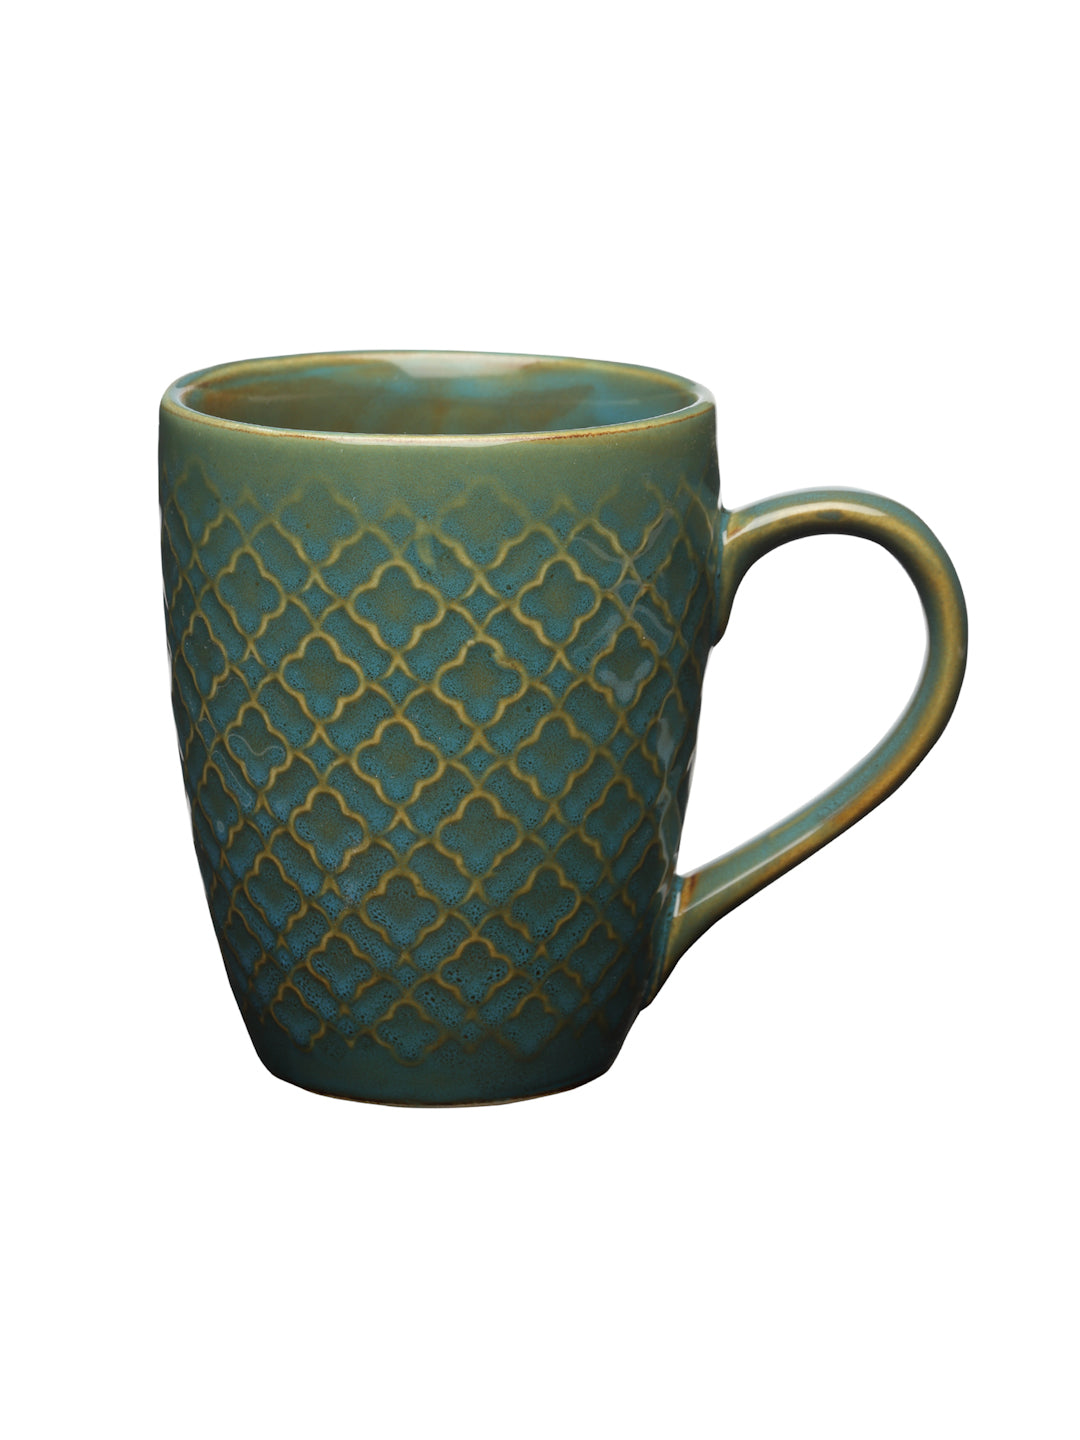 Textured Set of 6 Ceramic Mugs